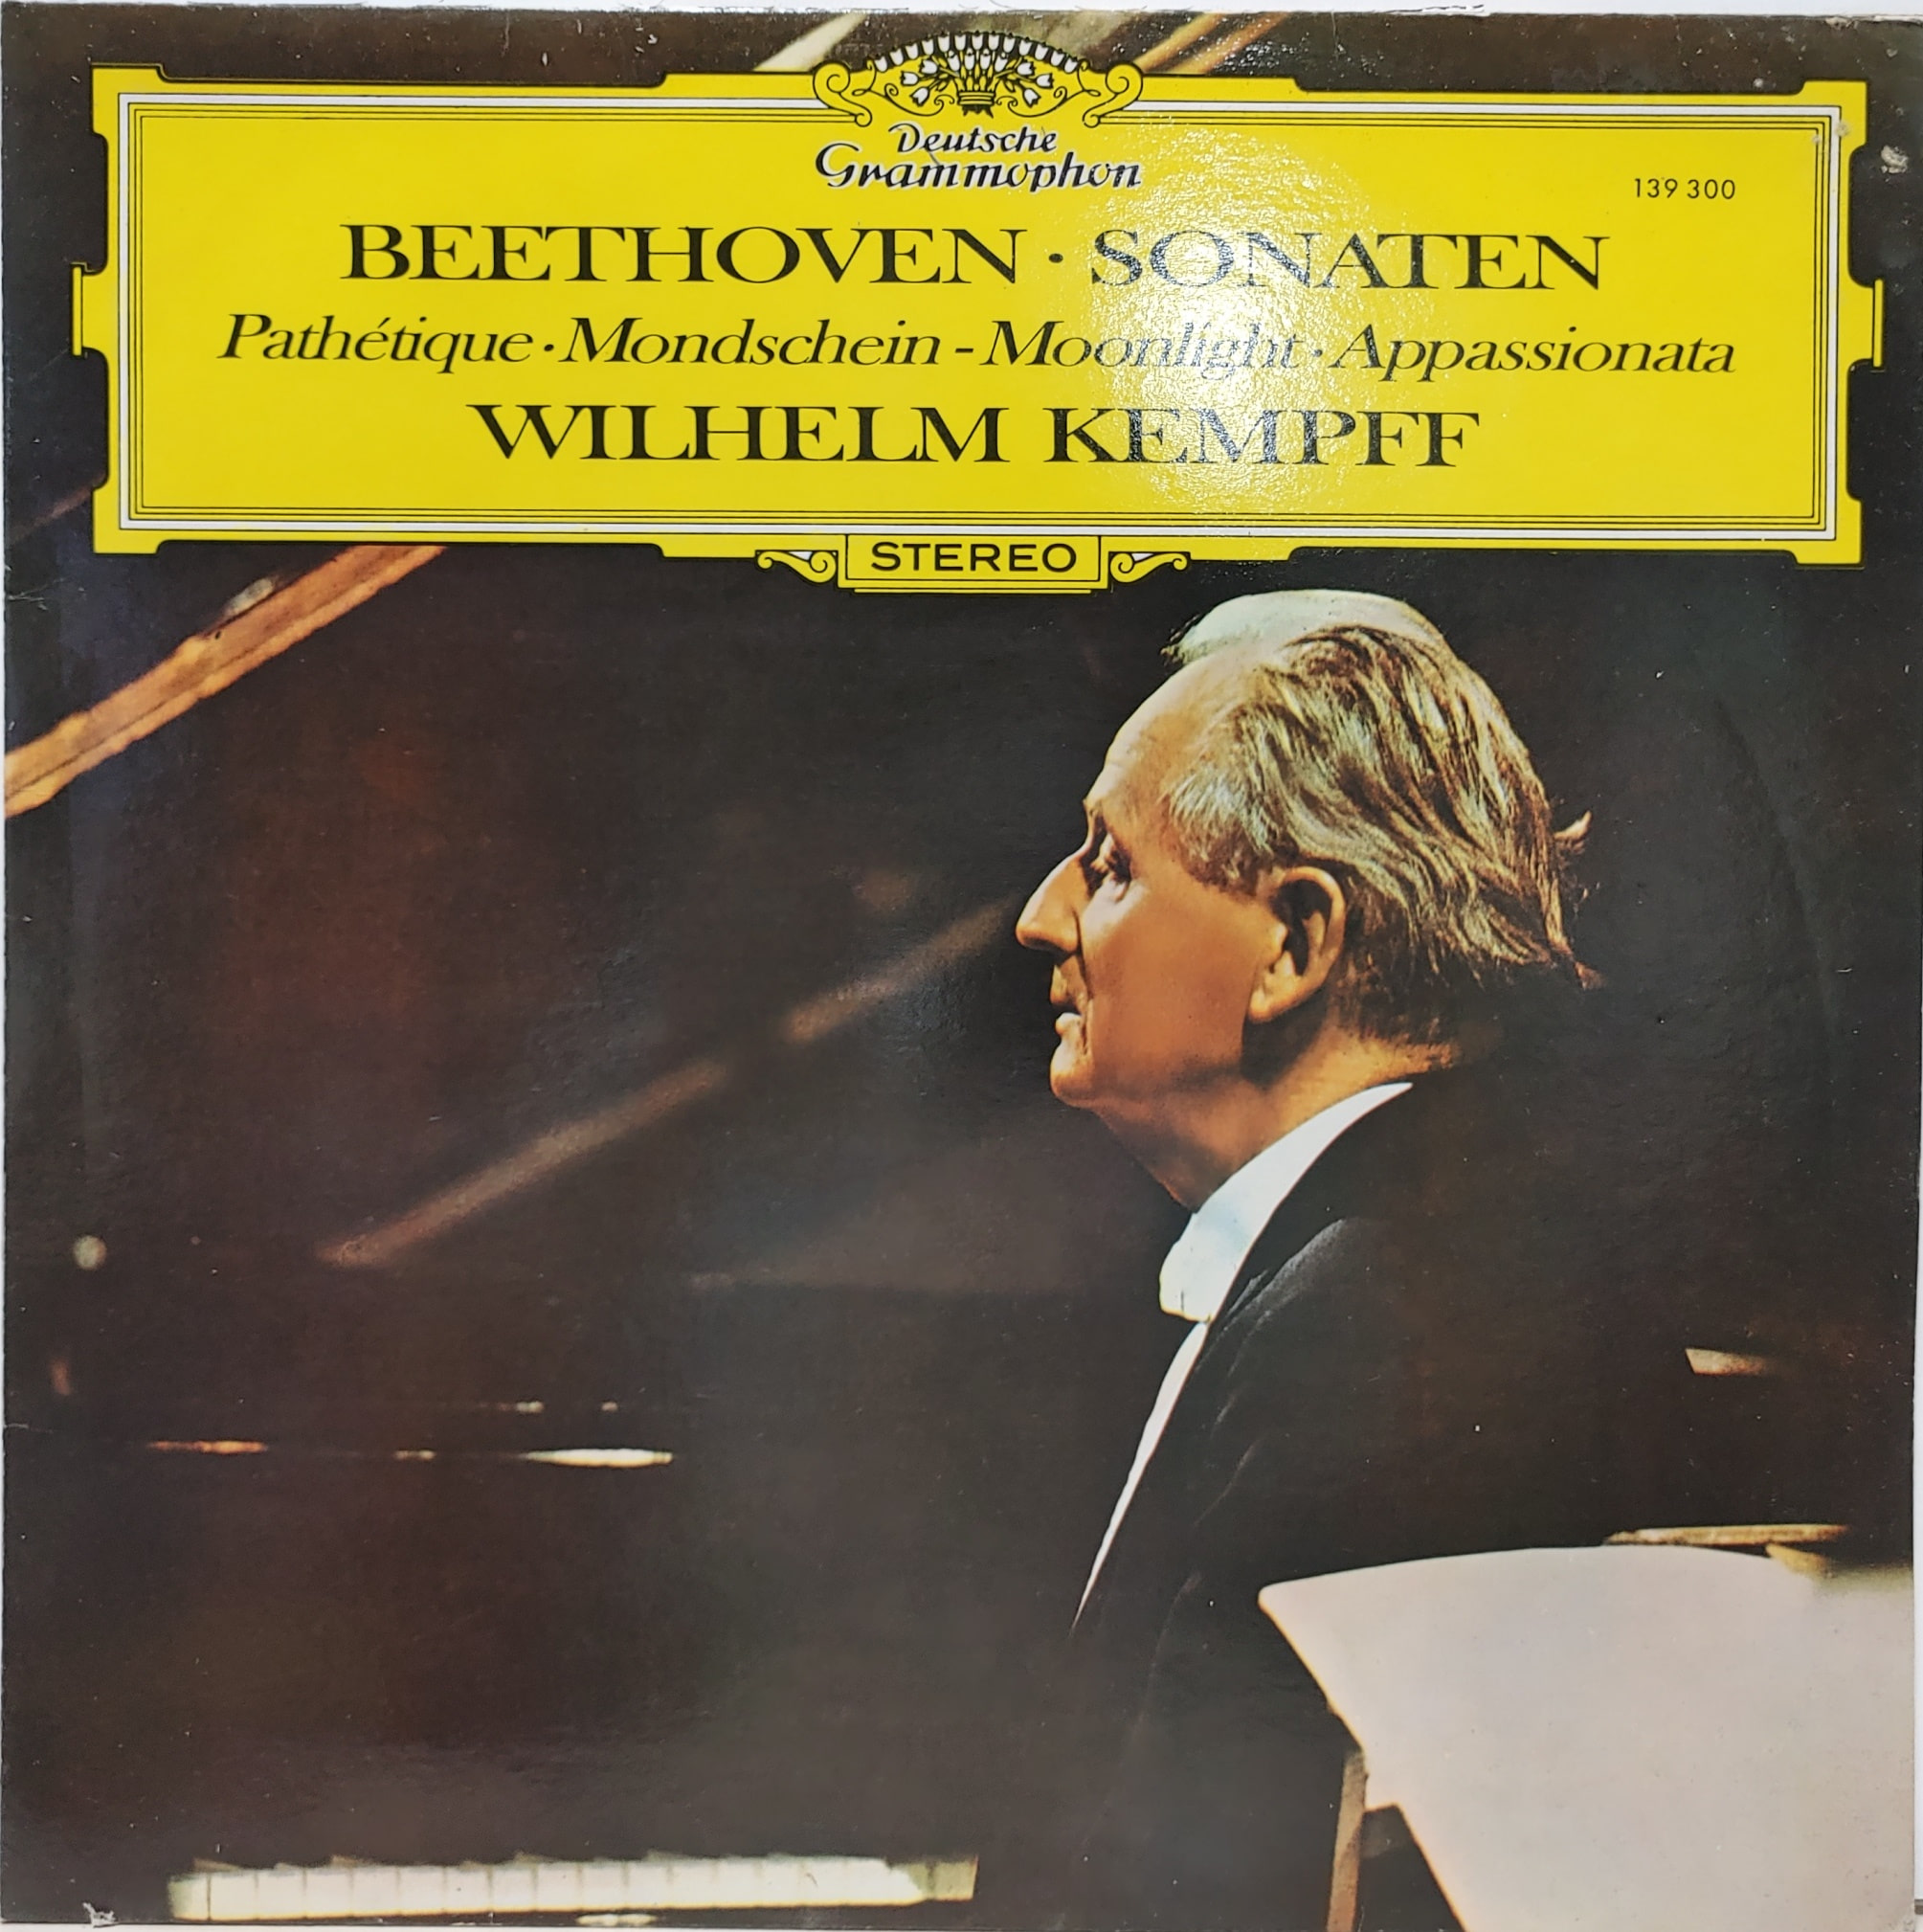 Beethoven Sonaten / Pathetique, Mondschein-Sonate, Appassionata Wilhelm Kempff